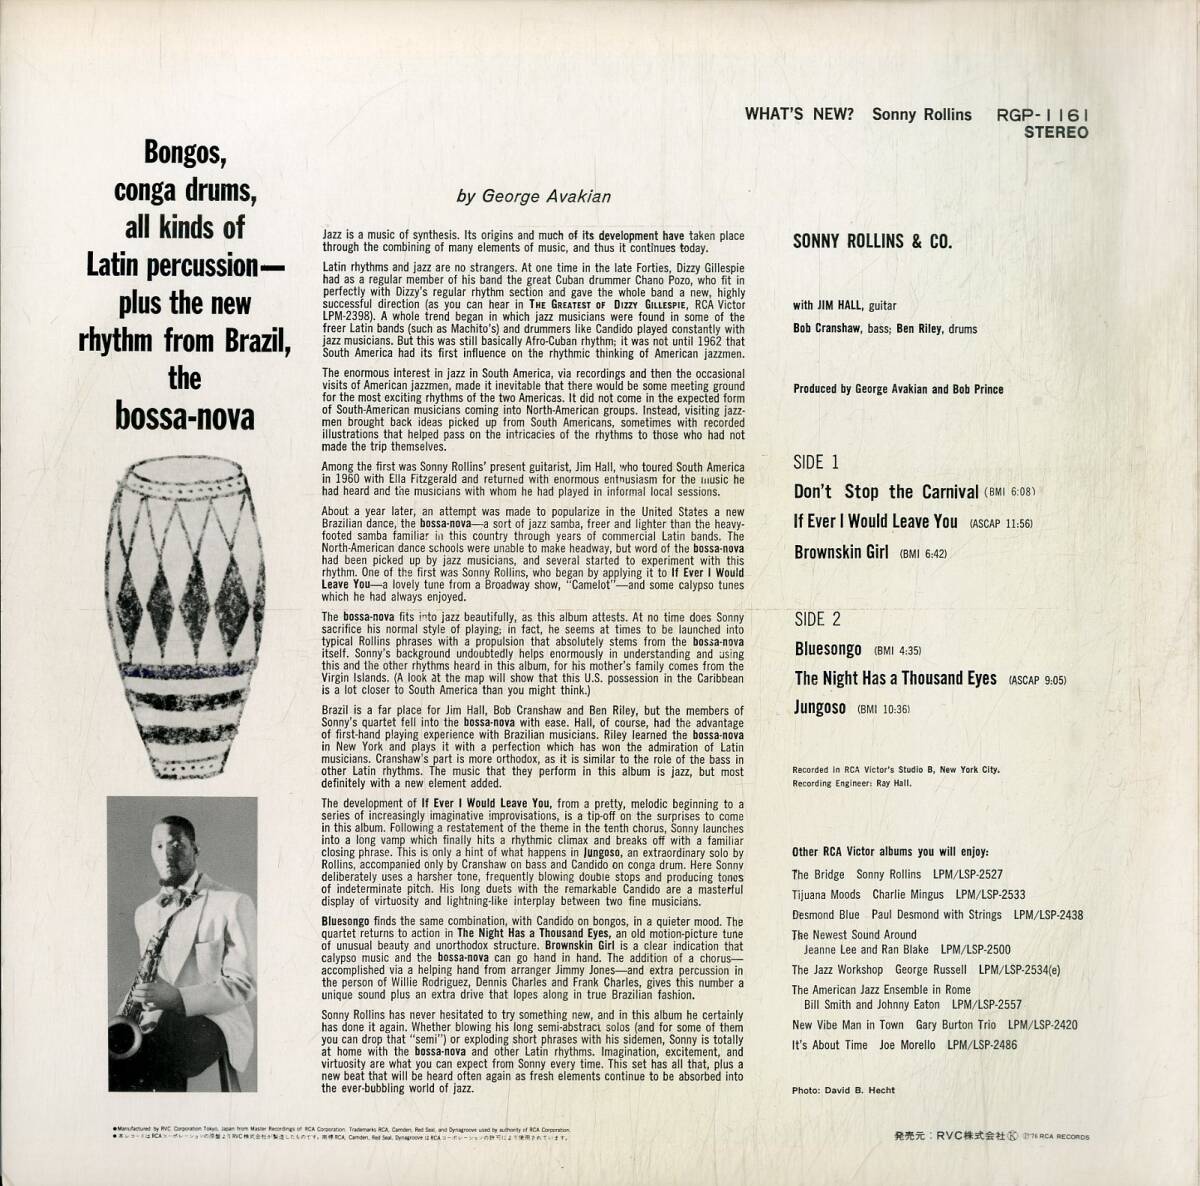 A00590926/LP/ソニー・ロリンズ(SONNY ROLLINS)「Whats New? ドント・ストップ・ザ・カーニバル (1976年・RGP-1161・ボサノヴァ・BOSSA Nの画像2